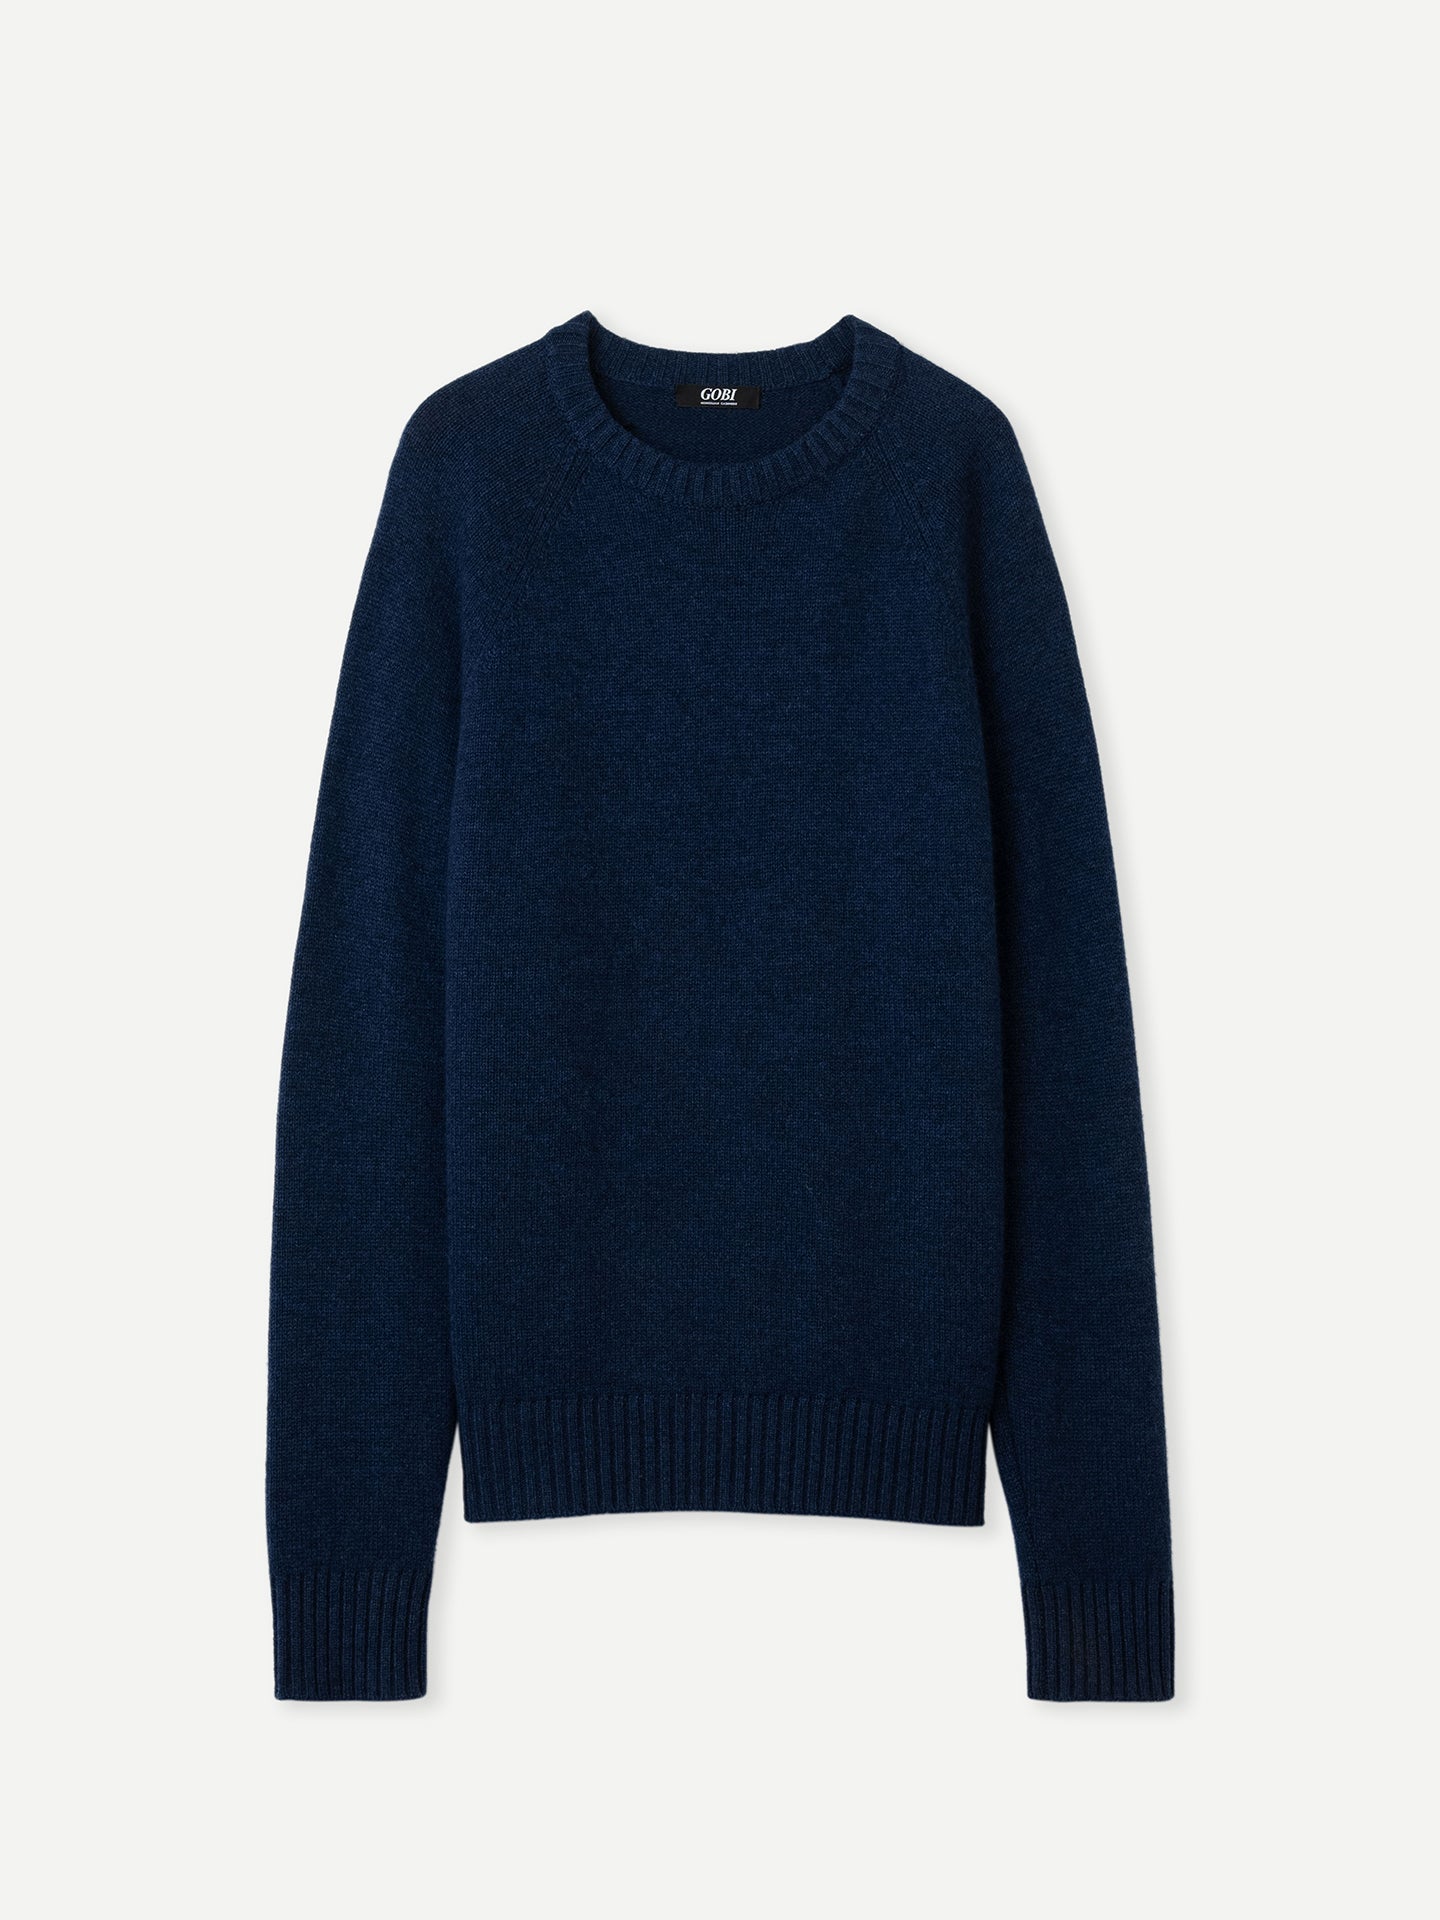 Men's Cashmere Raglan Sweater Eclipse - Gobi Cashmere